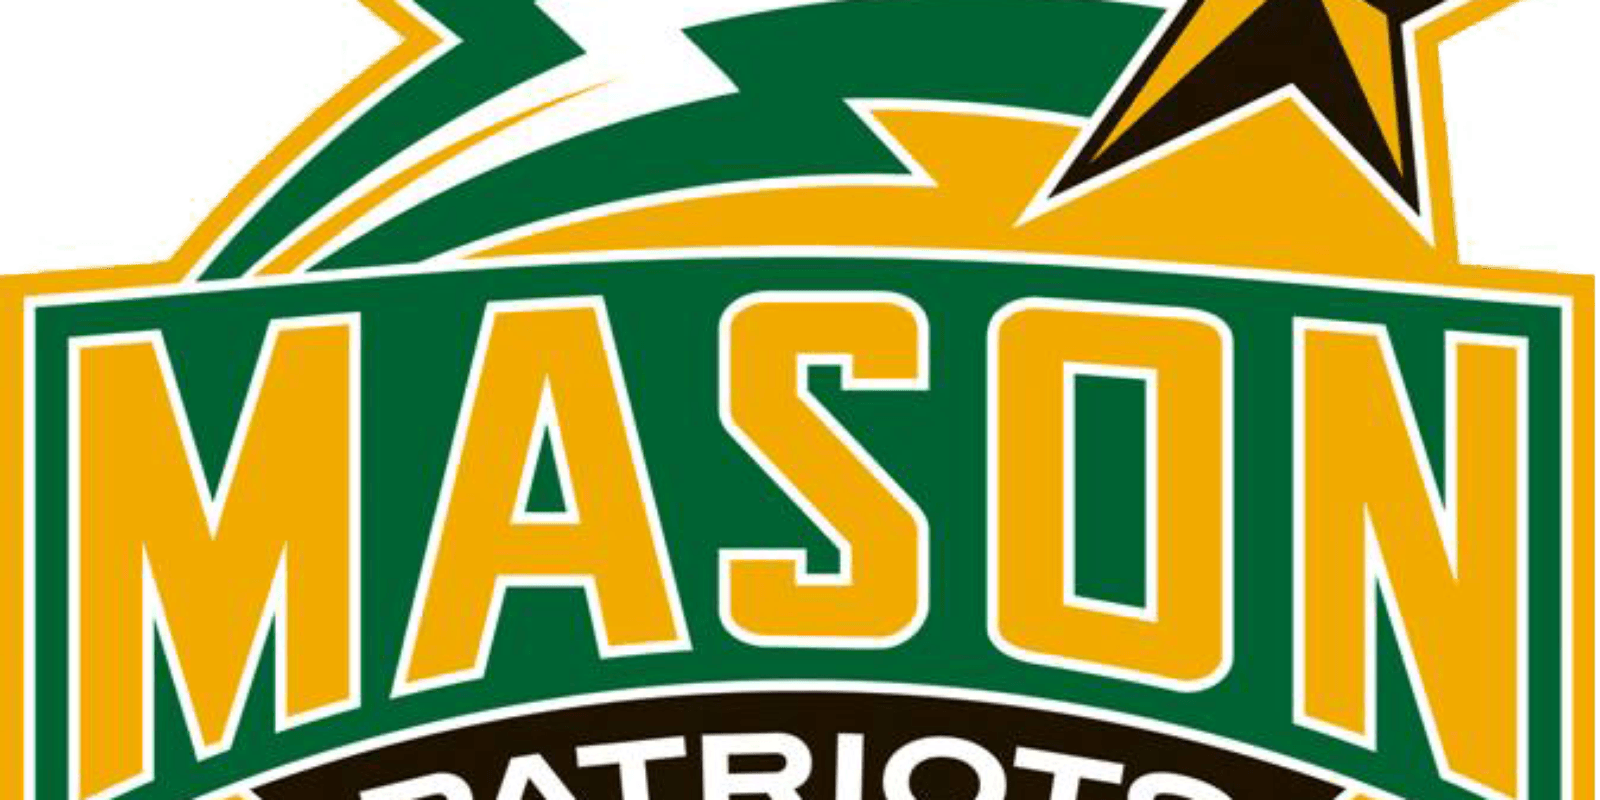 GMU Logo - Mason, Colter lead Duquesne past George Mason 86-75